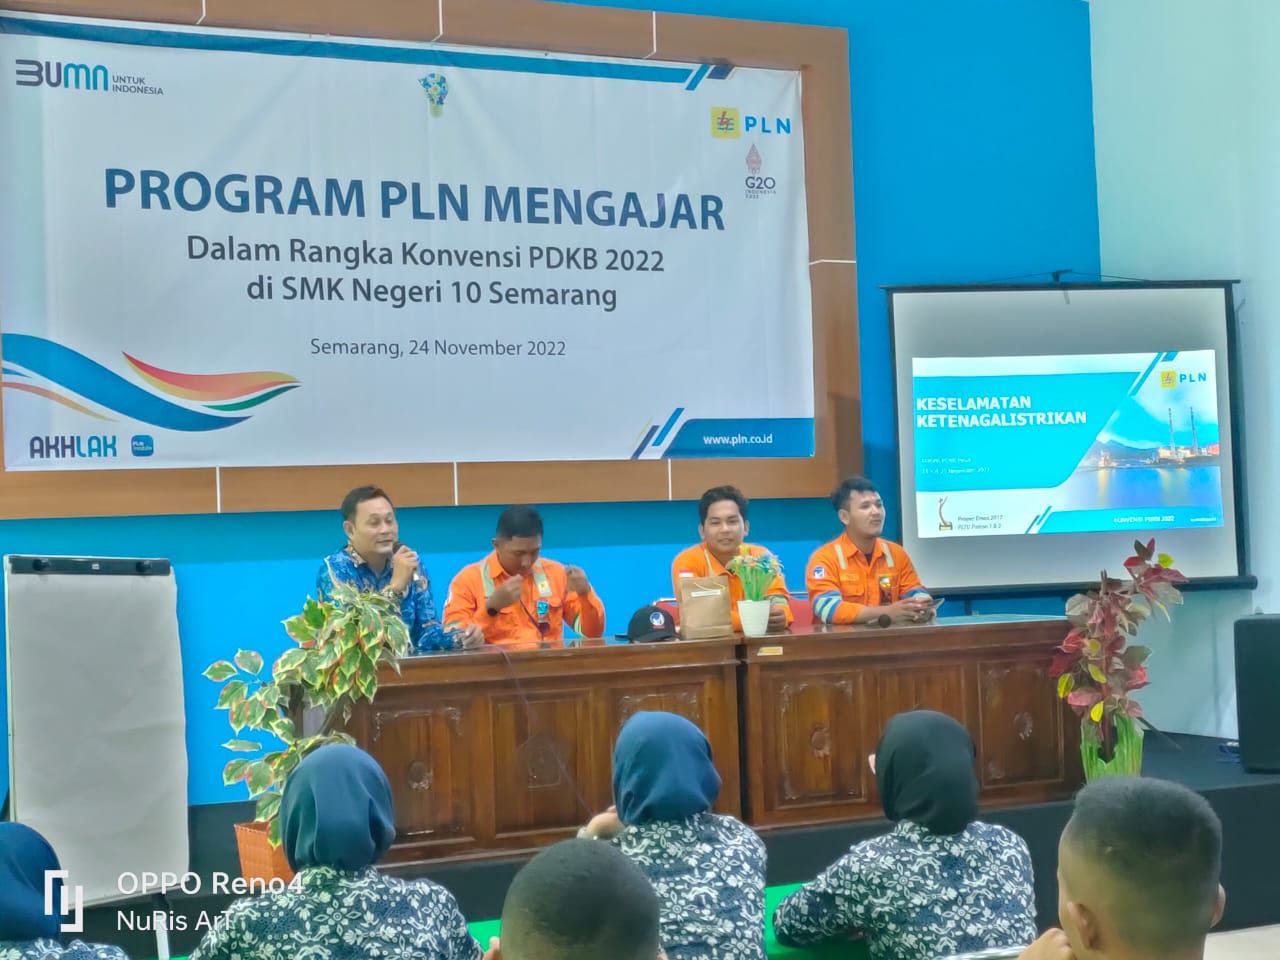 Program PLN mengajar goes to SMKN 10 Semarang